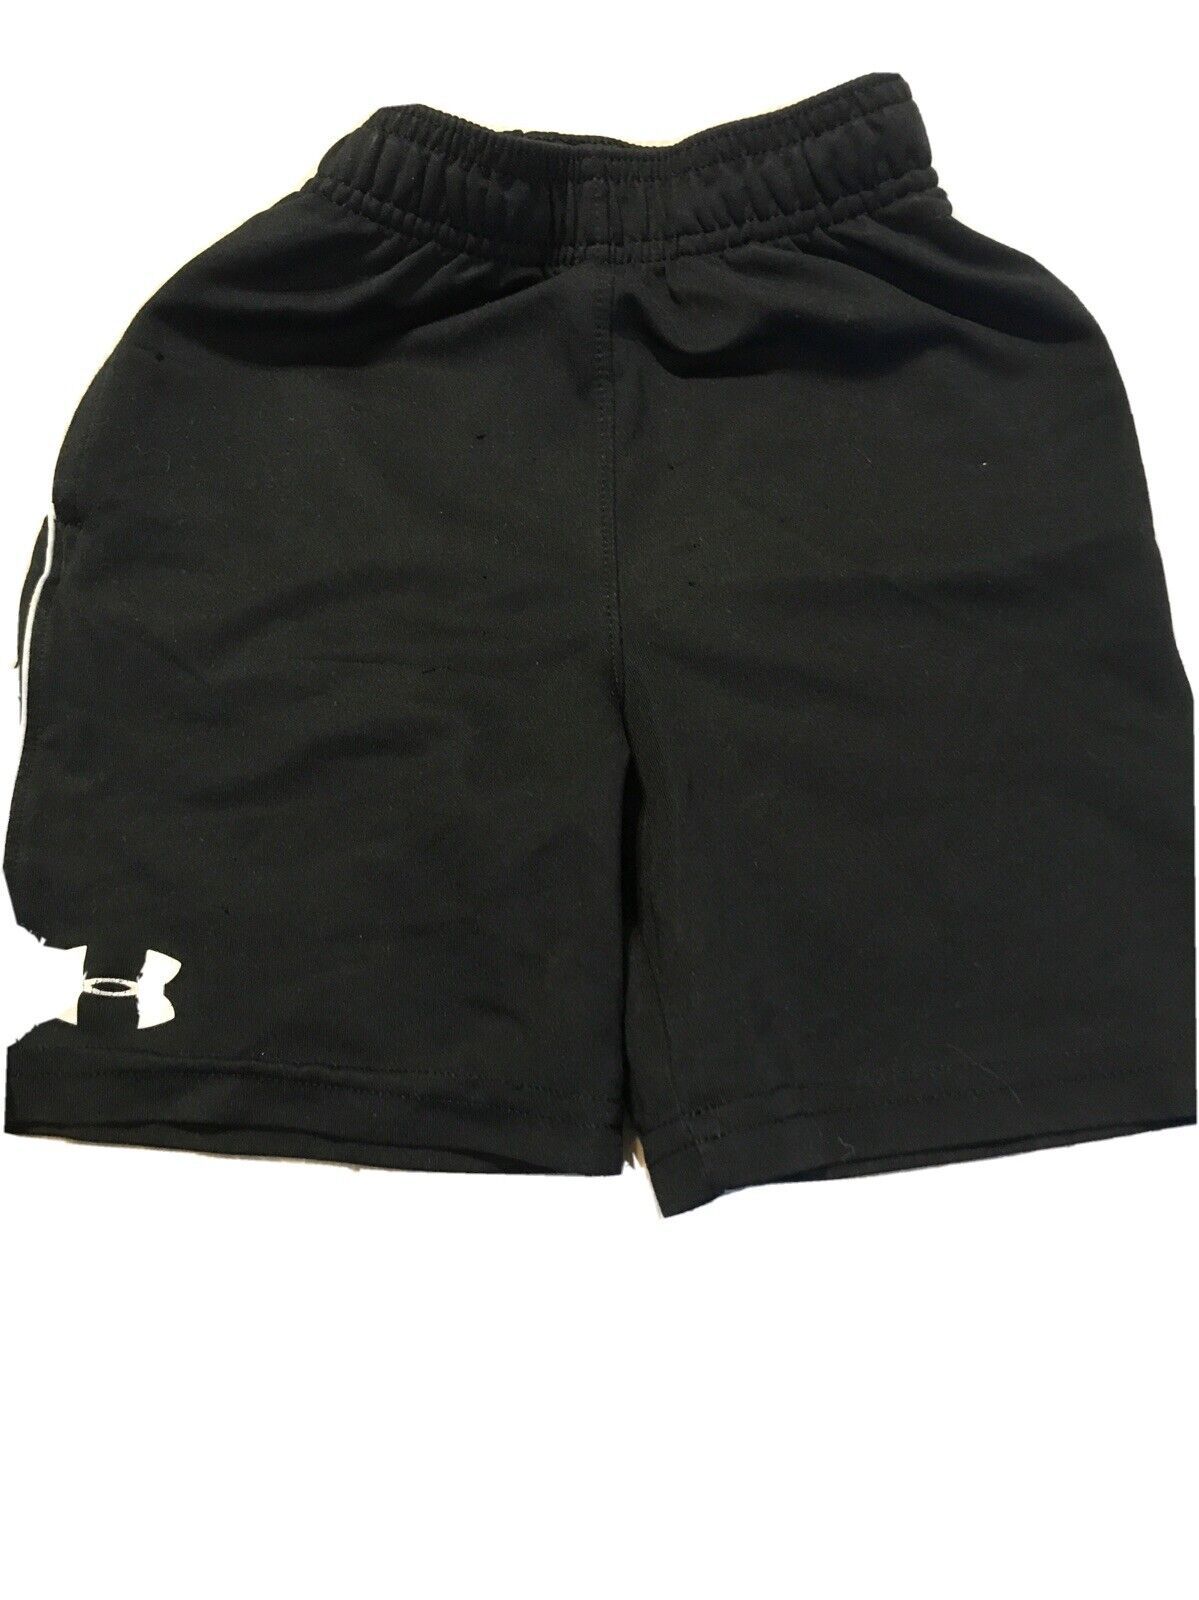 Under Armour Boys Athletic Logo Shorts Size 4 Under Armor Shorts Under Armuor - $5.93